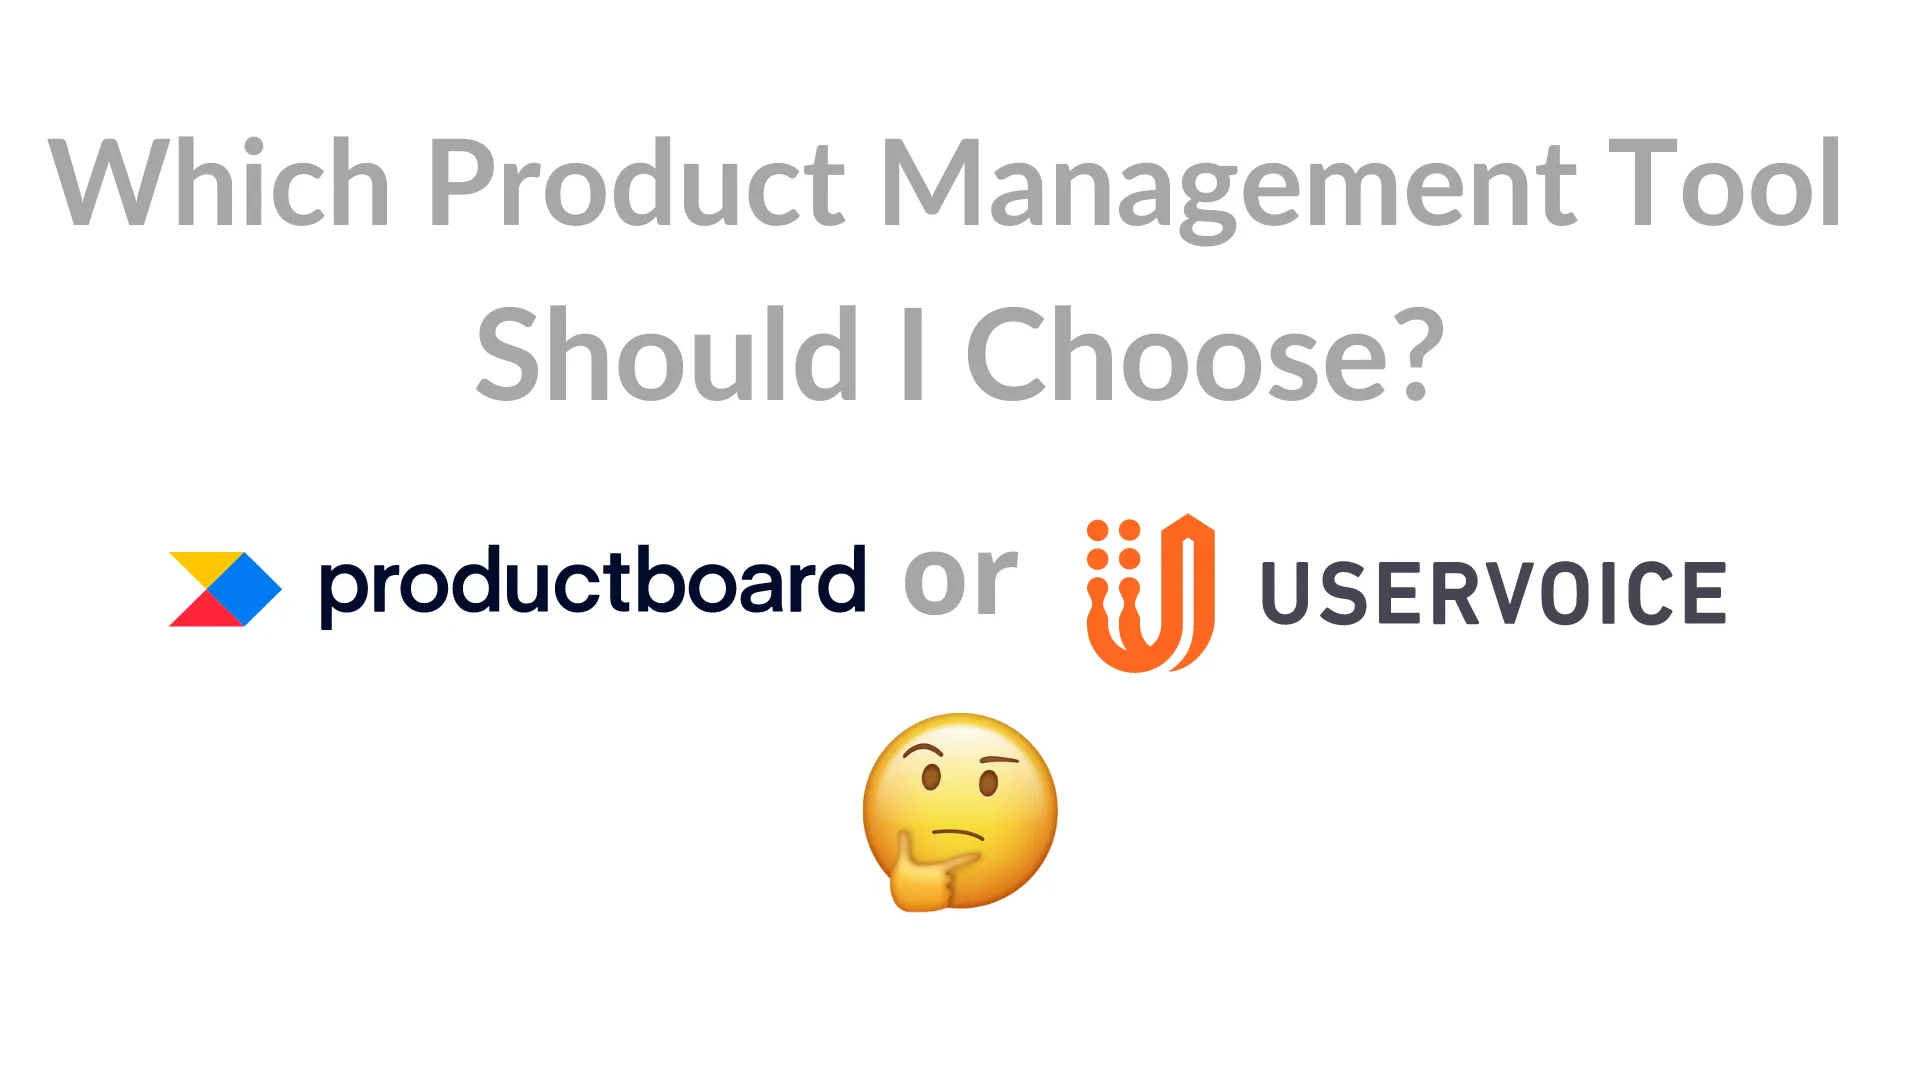 uservoice vs productboard image